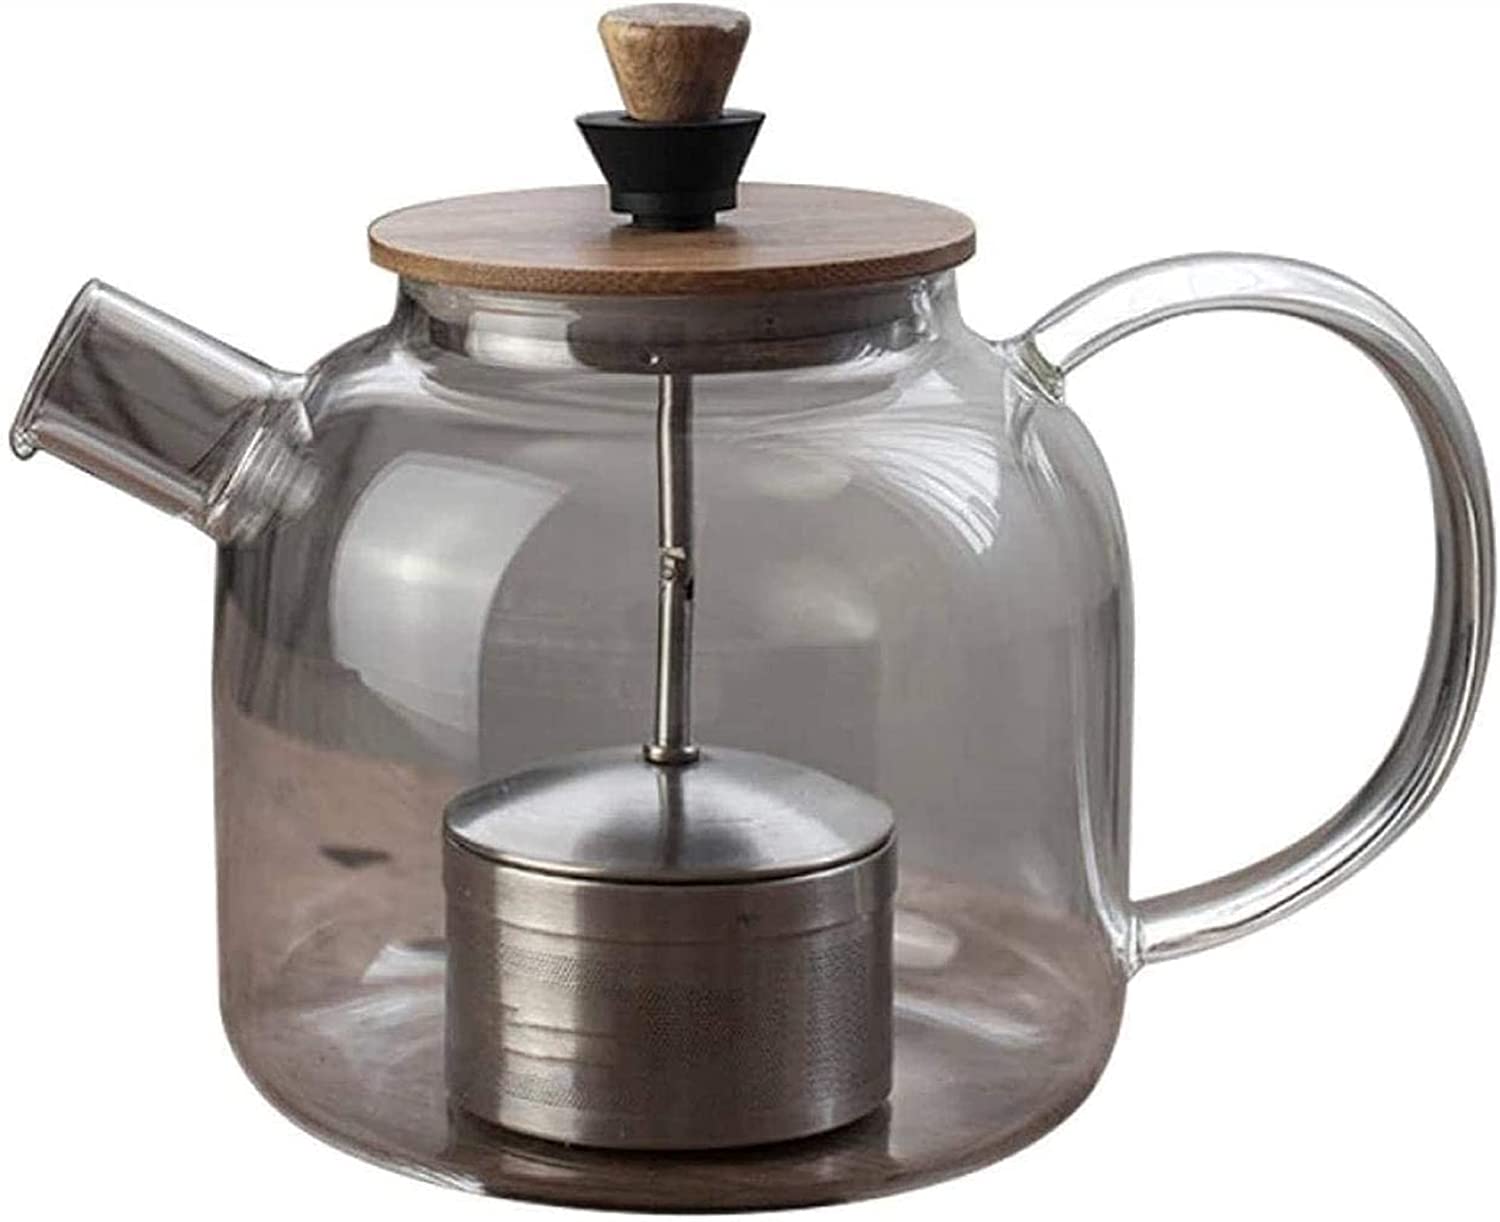 Teekannen Single Pot, Large Capacity Glass Filter Small Kettle Household Tea Maker, Electric Ceramic Cooker Uomun